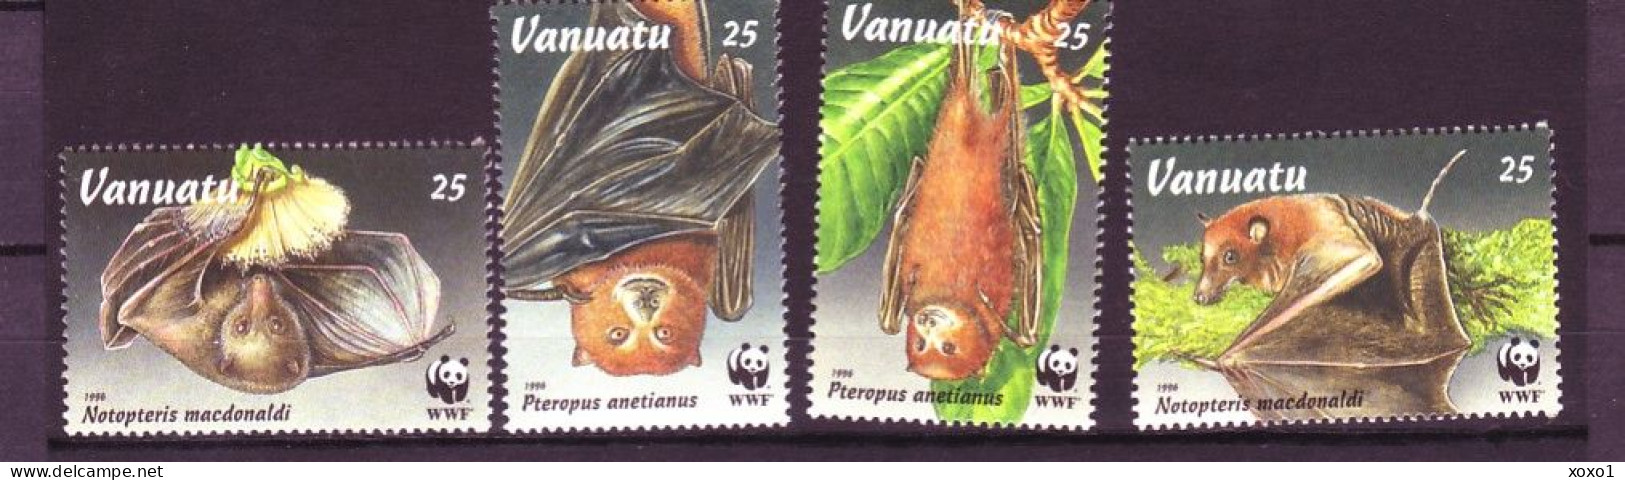 Vanuatu 1996 MiNr. 1004 - 1009 WWF Mammals Bats Insular Flying Fox, Fijian Blossom Bat  4v  MNH** 3.60 € - Vleermuizen